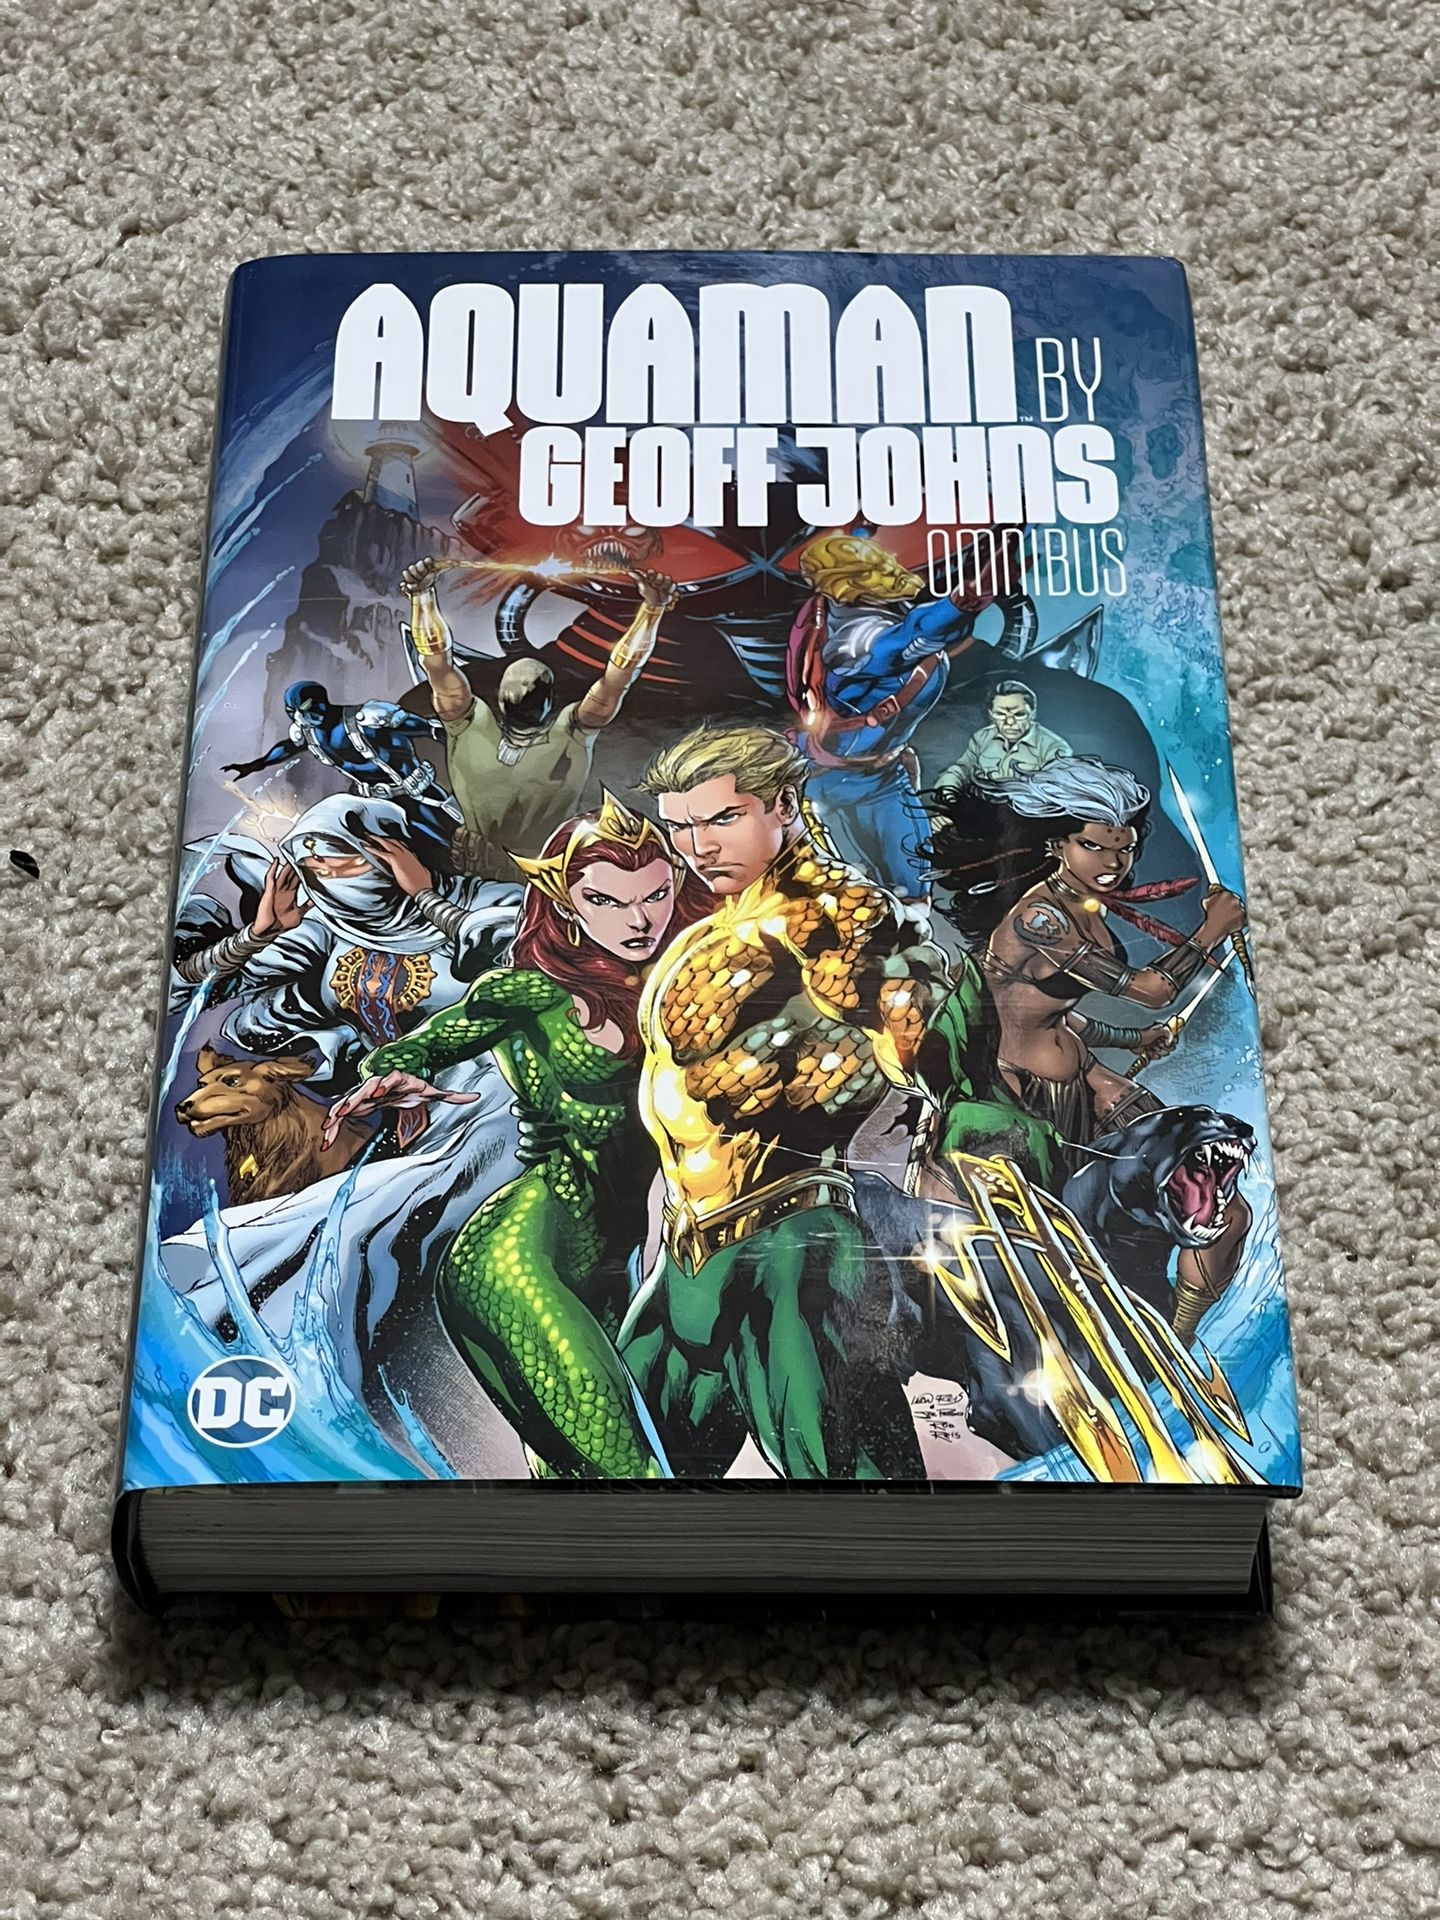 Aquaman By Geoff Johns Omnibus (DC Comics)